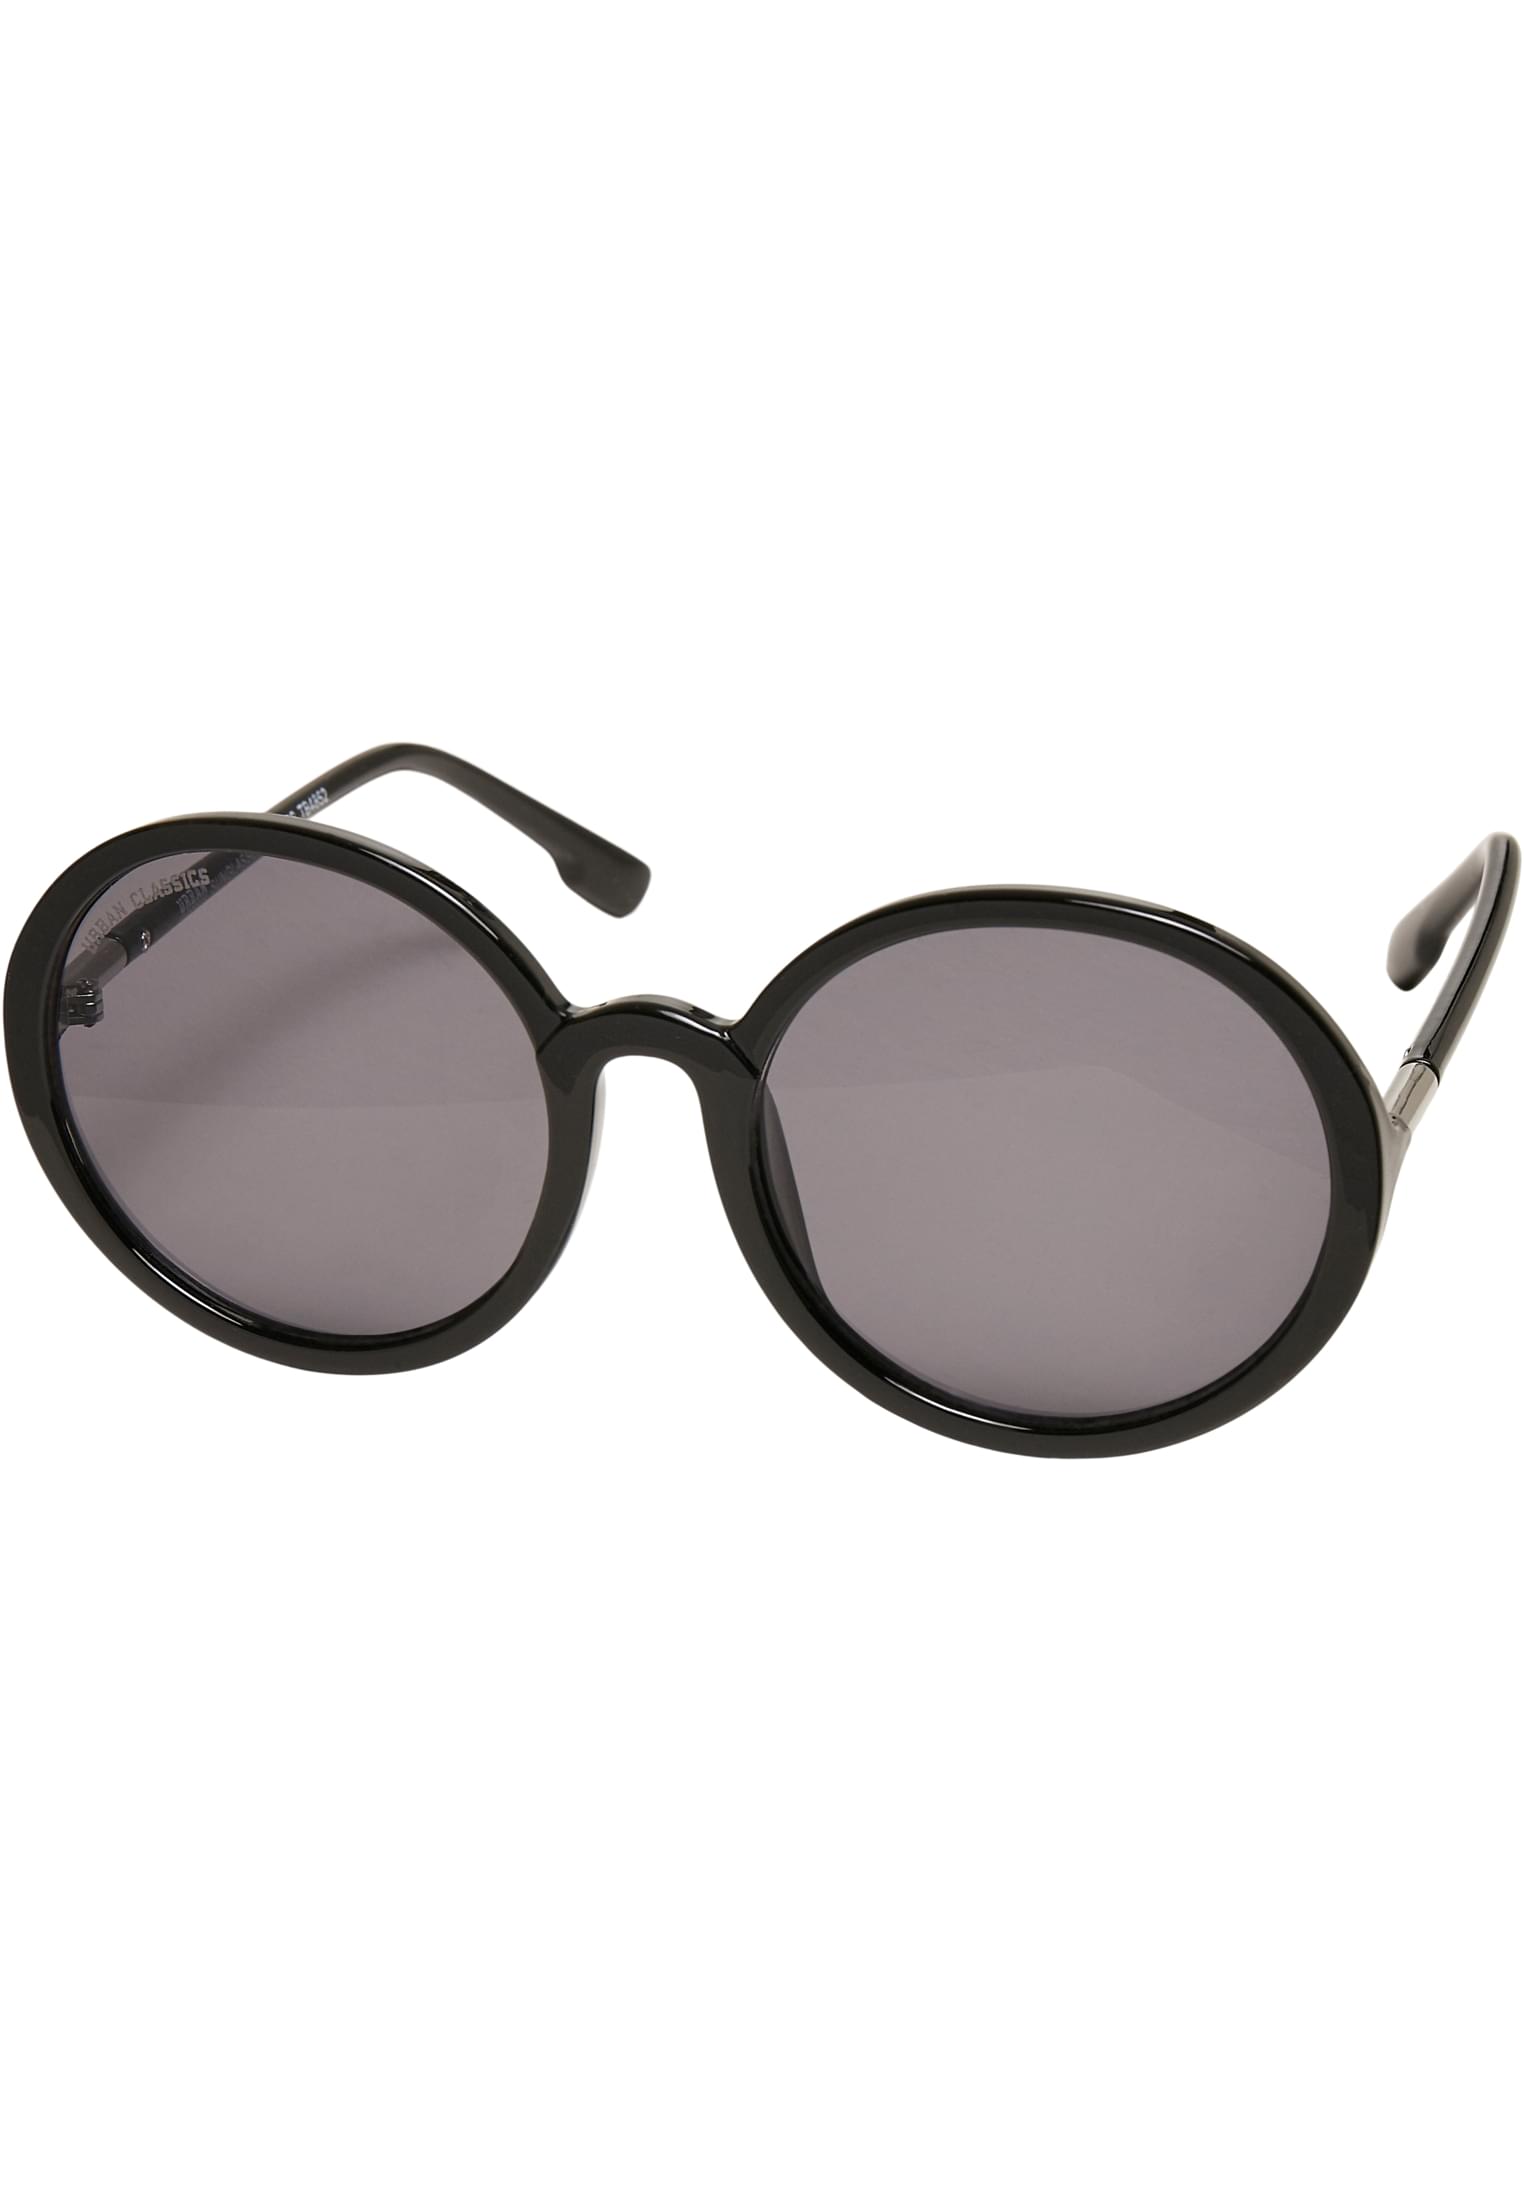 Sonnenbrillen Sunglasses Cannes with Chain in Farbe black